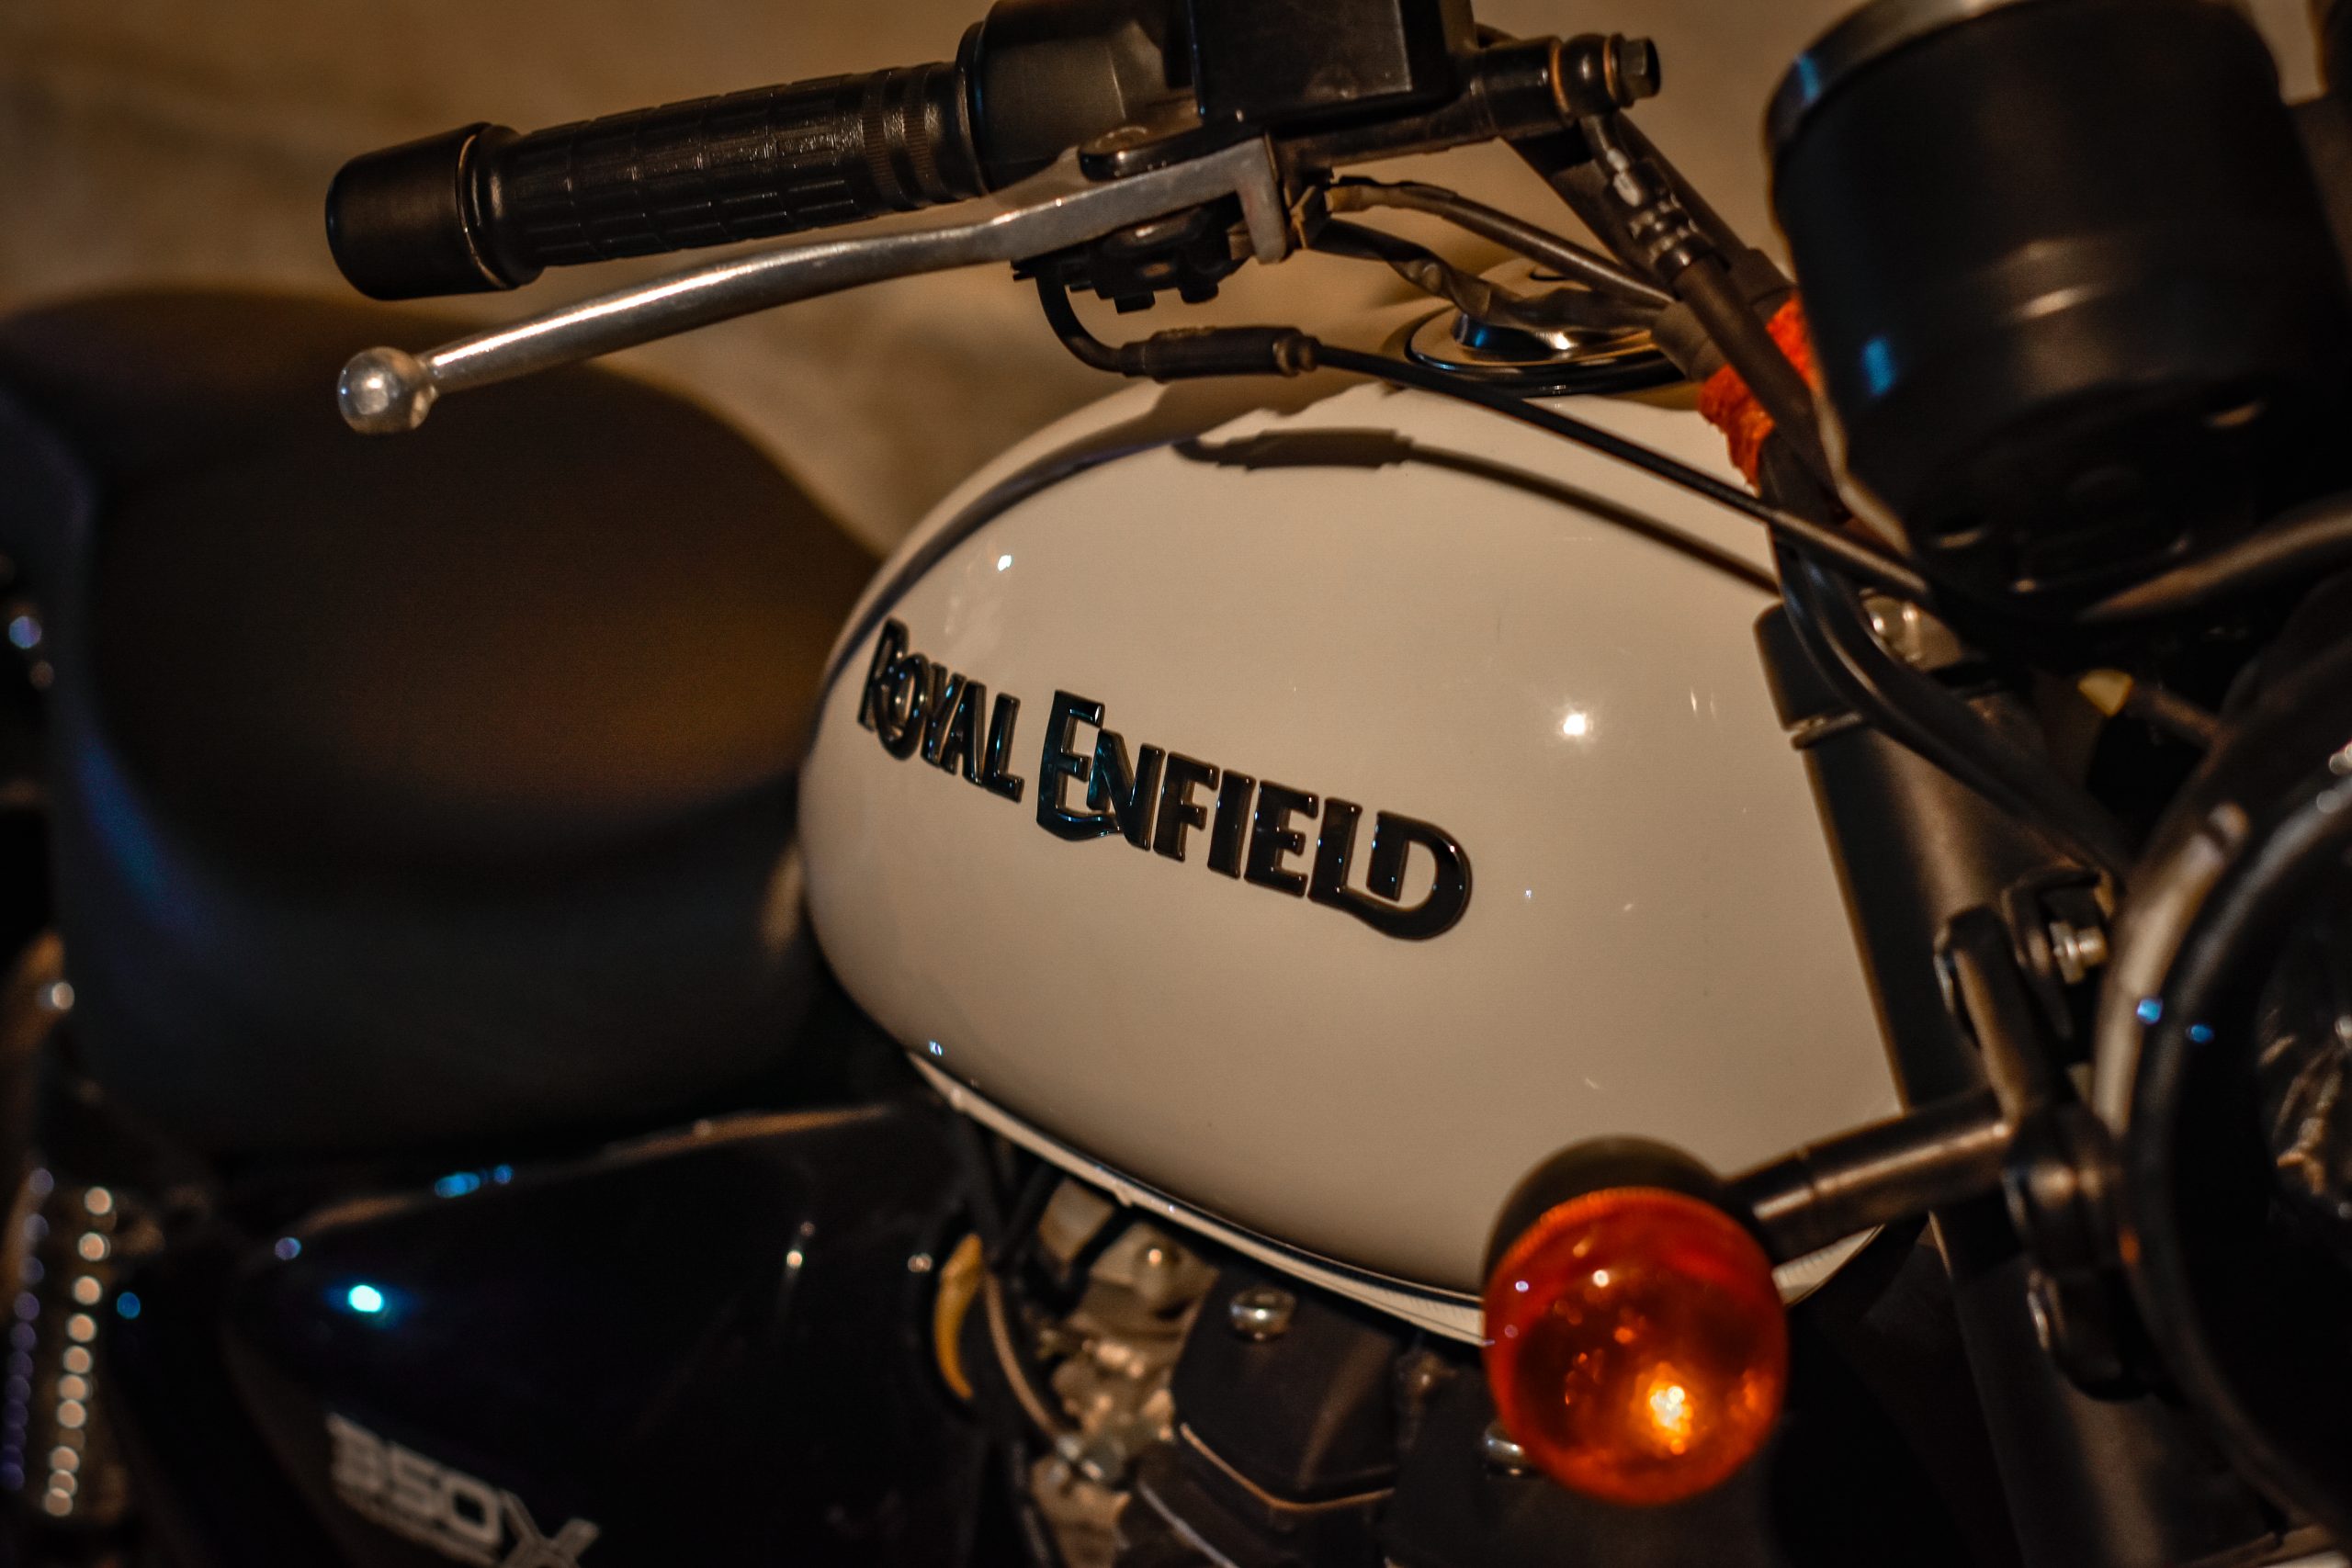 Royal Enfield motorcycle